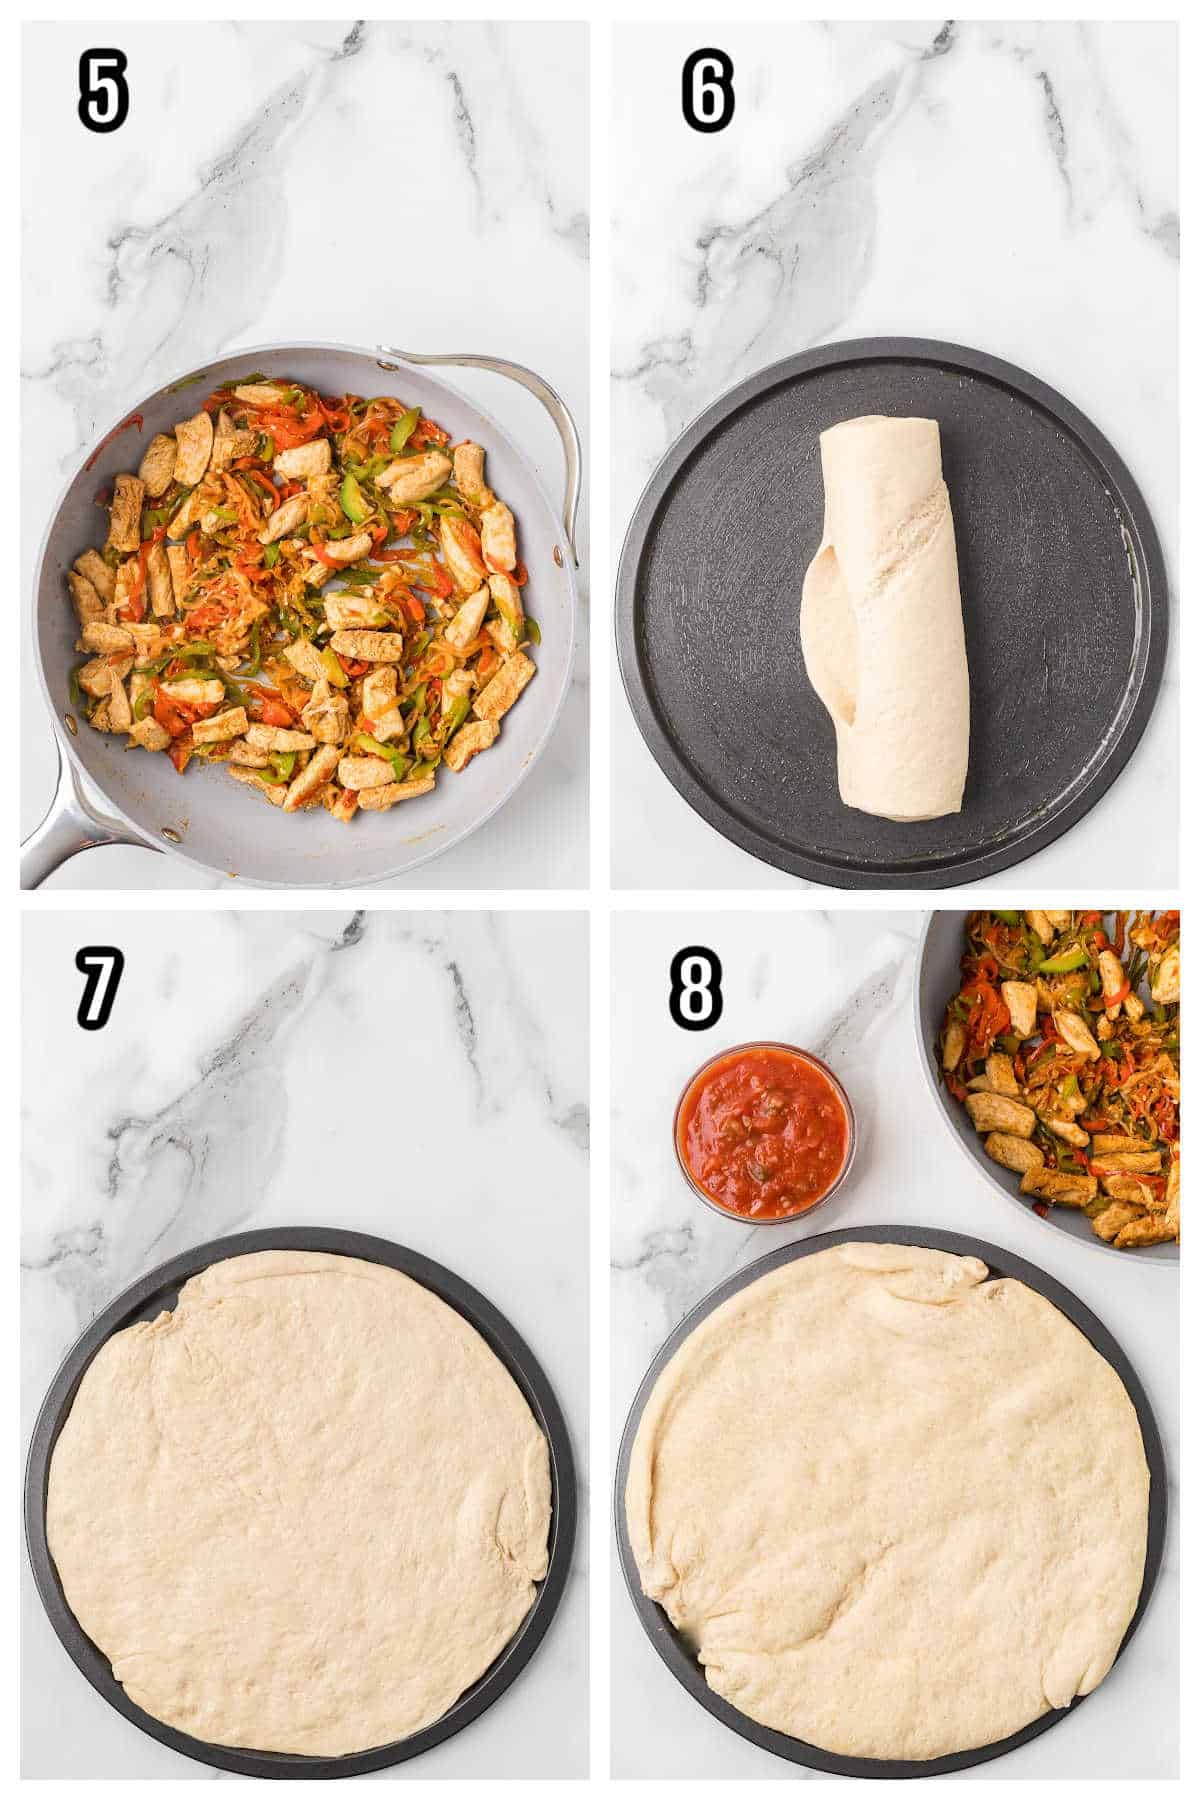 The second collage follows steps five through eight for the Chicken Fajita Pizza recipe. 